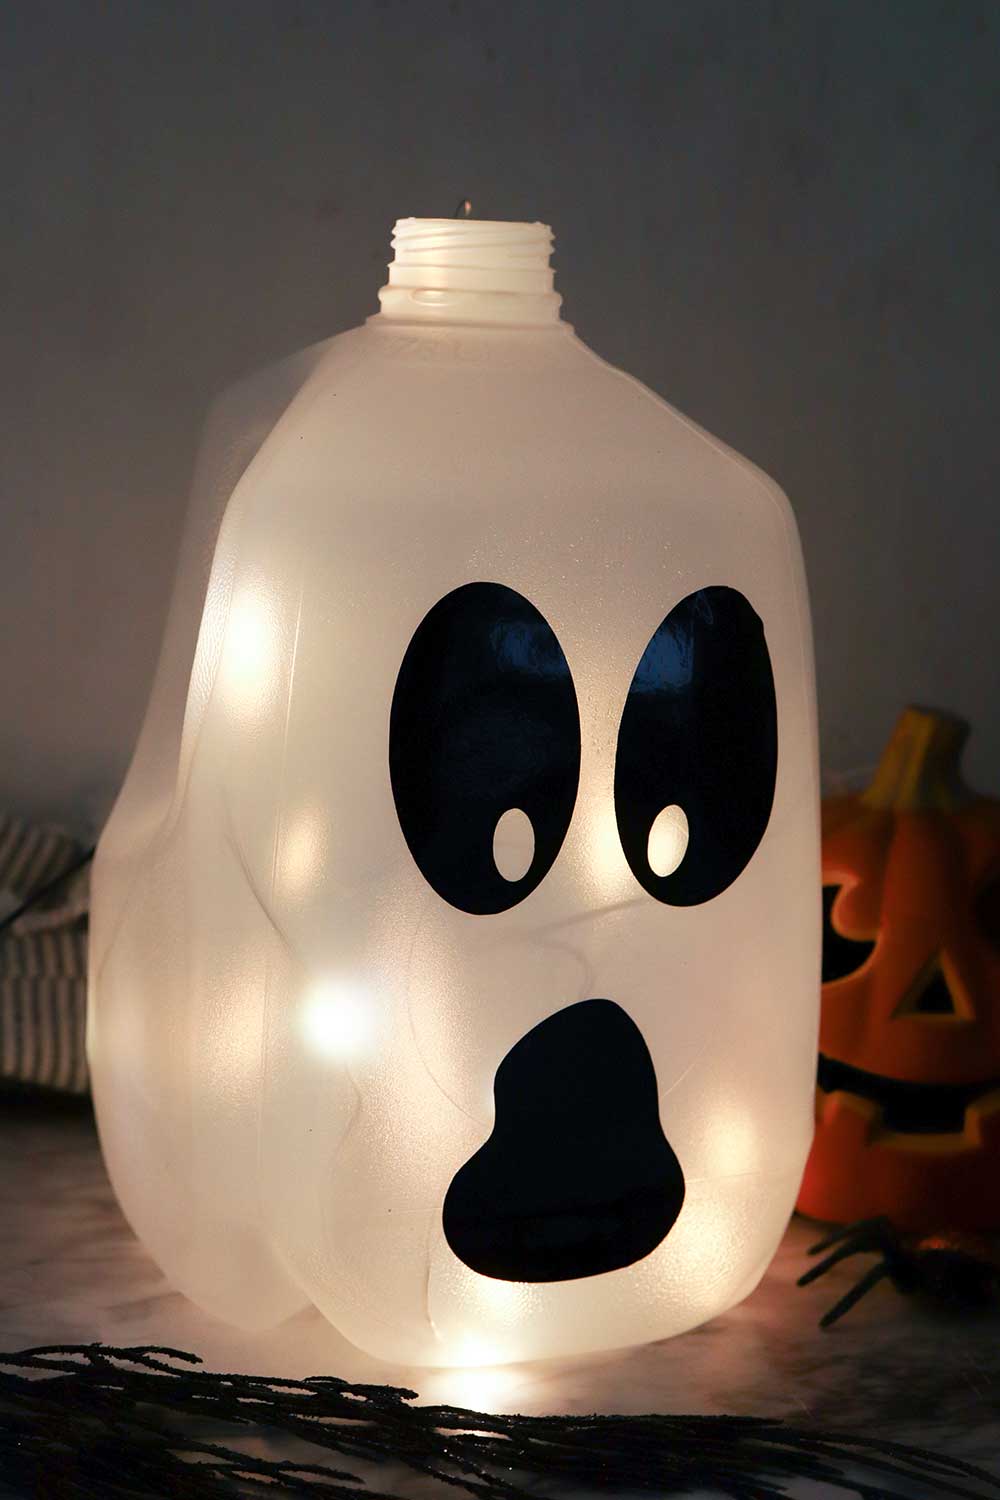 https://singlegirlsdiy.com/wp-content/uploads/2021/10/diy-milk-jug-ghost-luminary-for-halloween.jpg